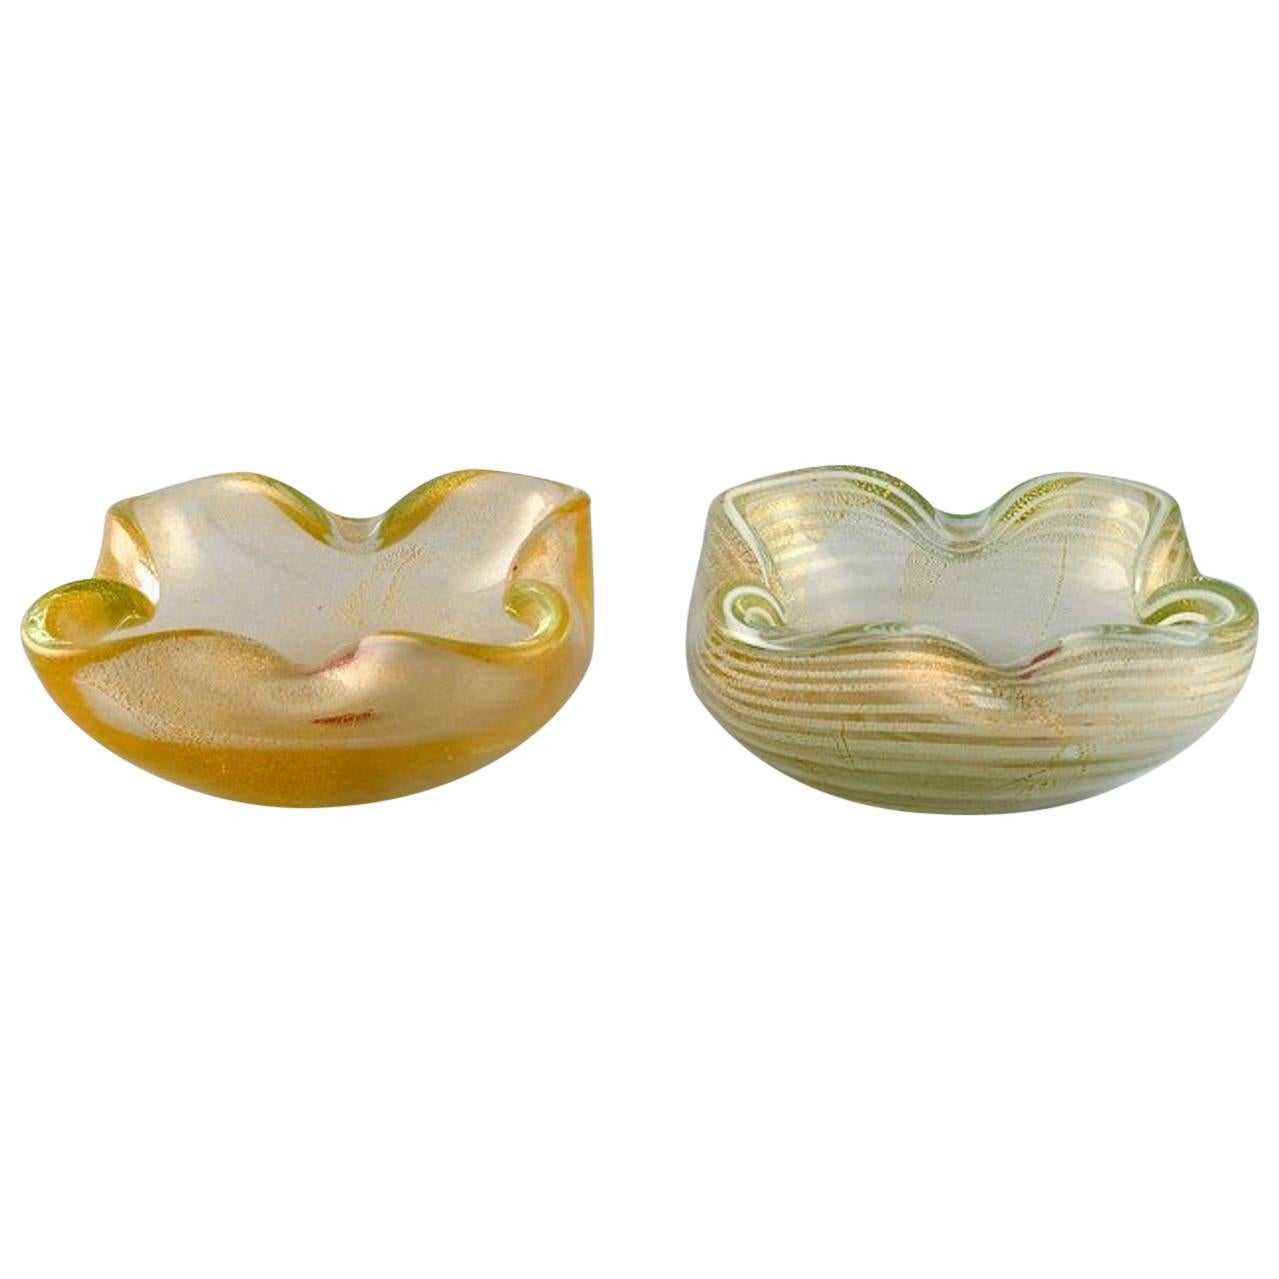 Two Murano Bowls in Mouth Blown Art Glass, Italian Design, 1960s